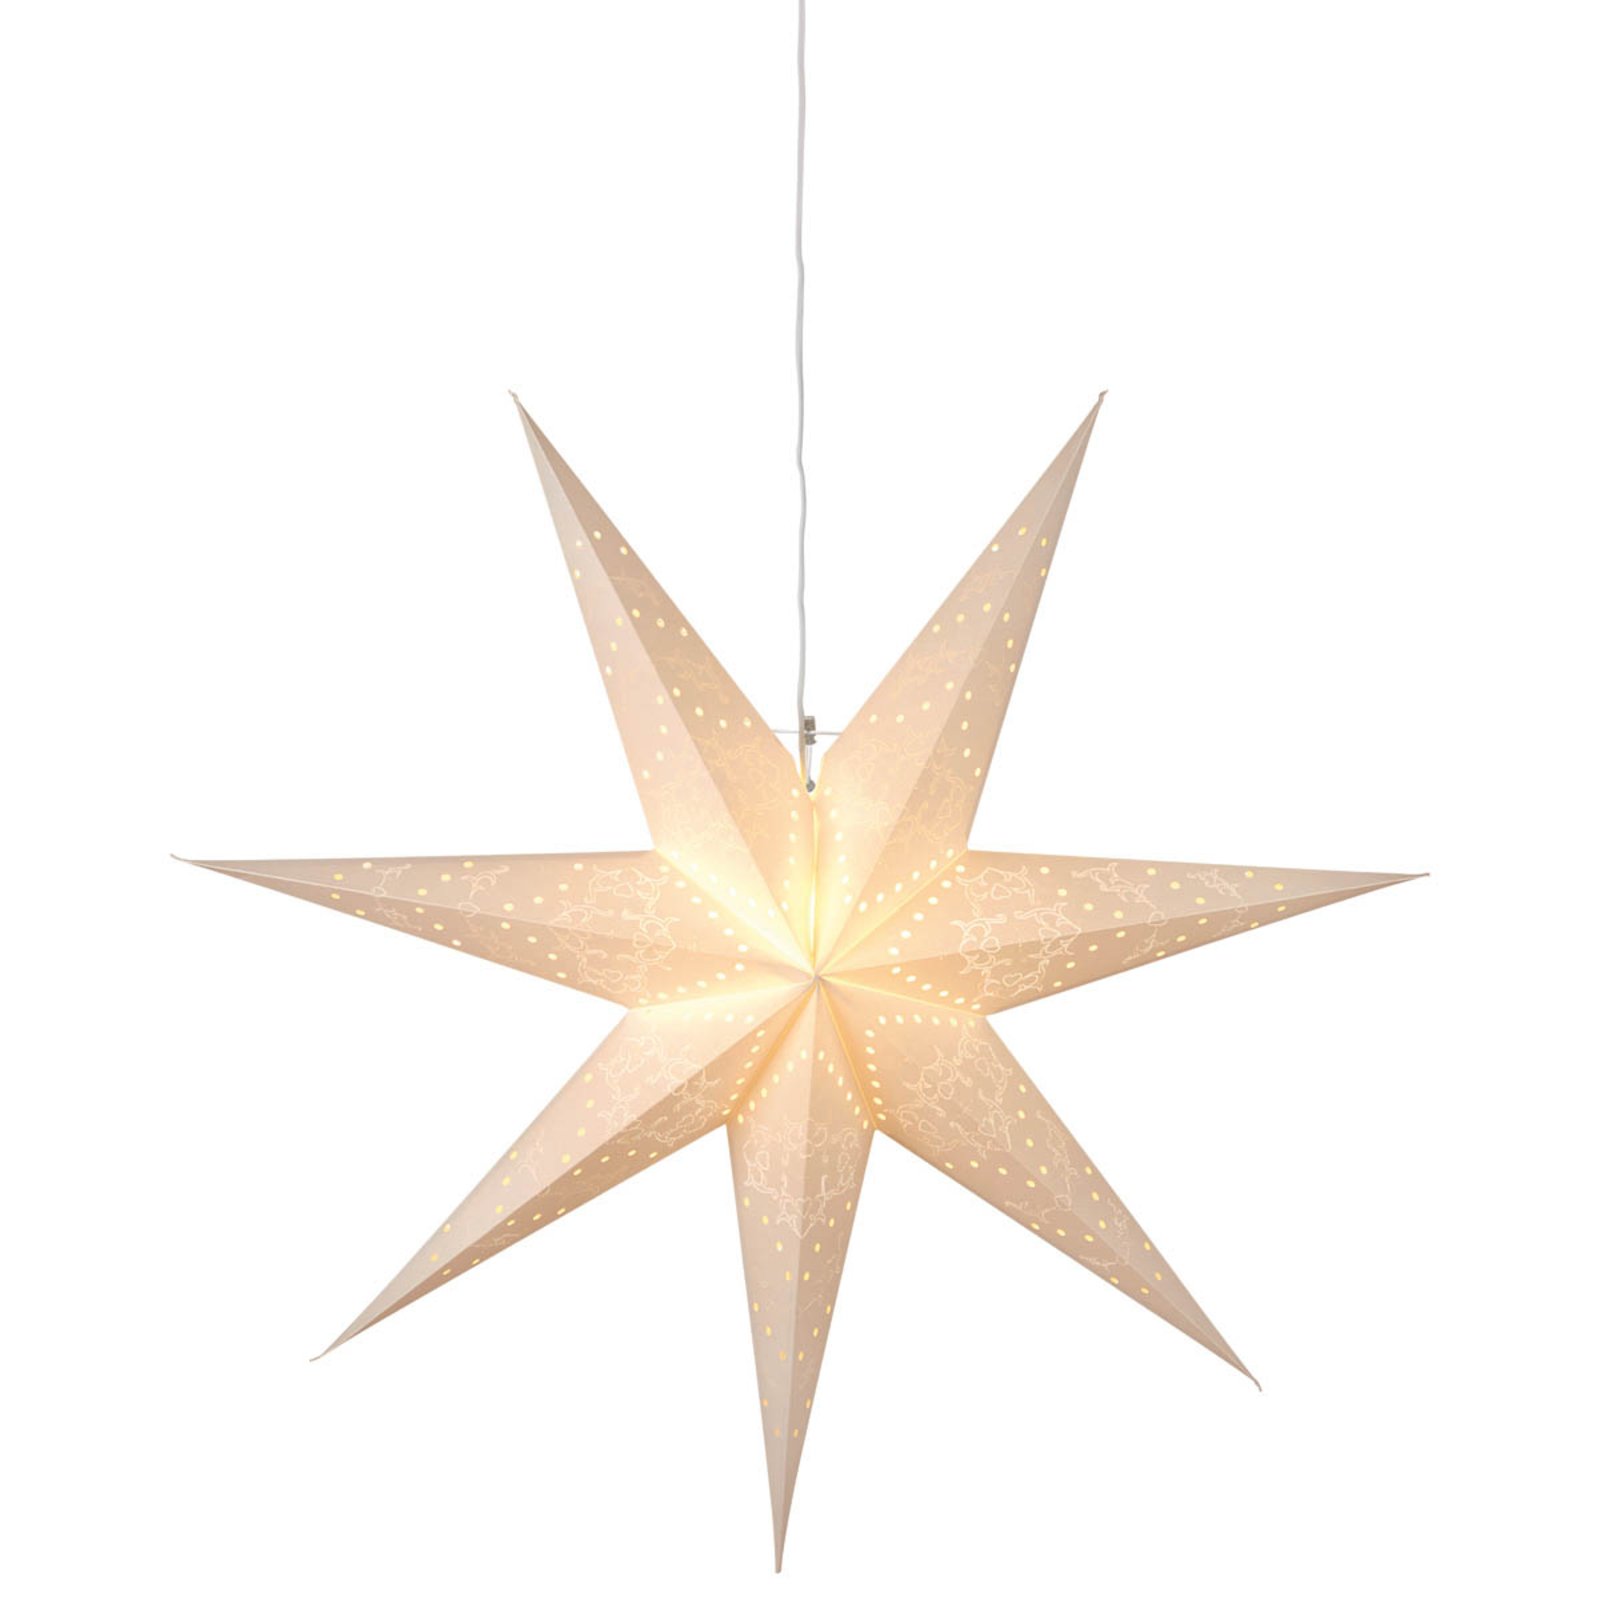 Estrella decorativa Sensy Star con siete puntas